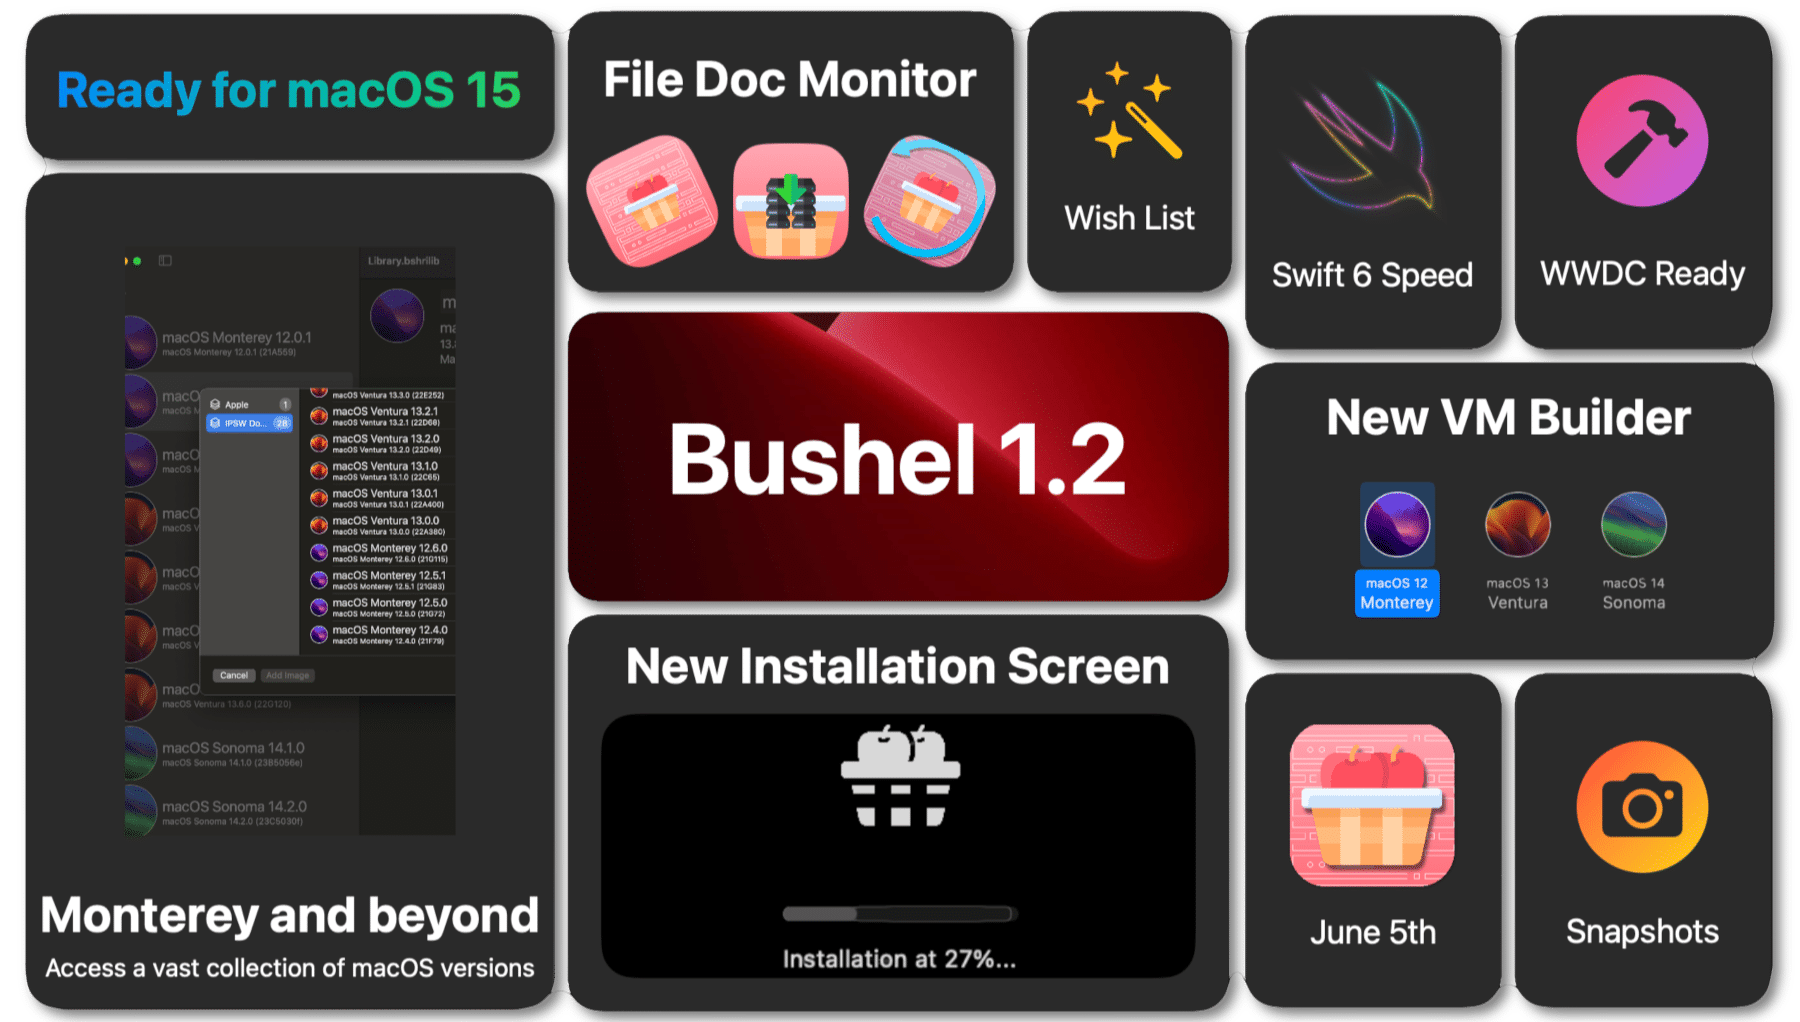 What's New in Bushel 1.2